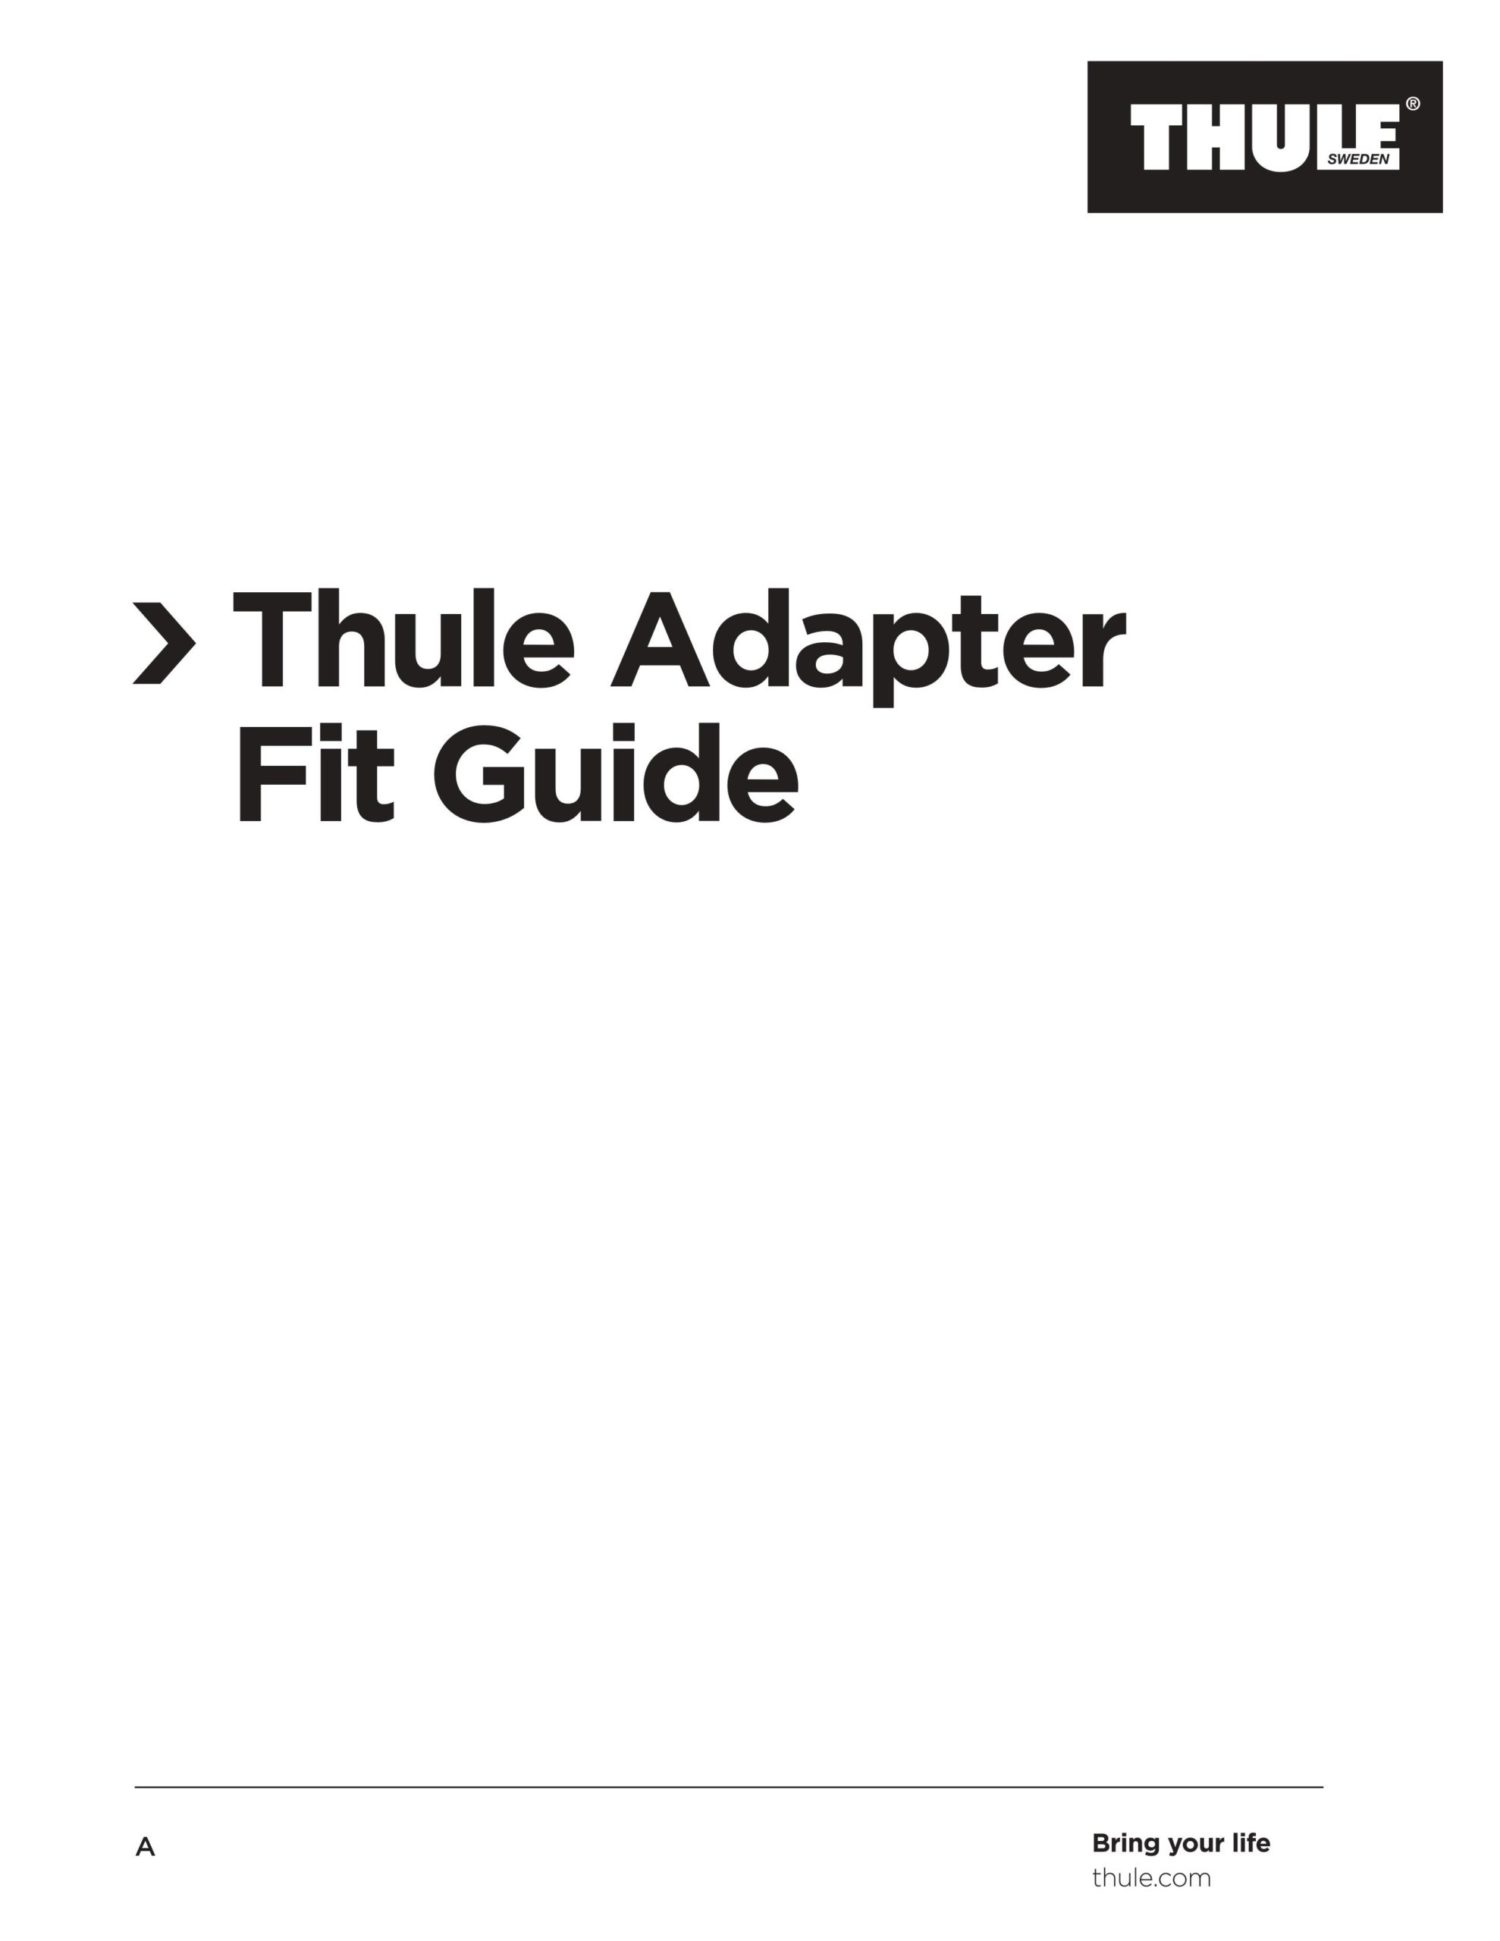 thule axle adapter cykel guide